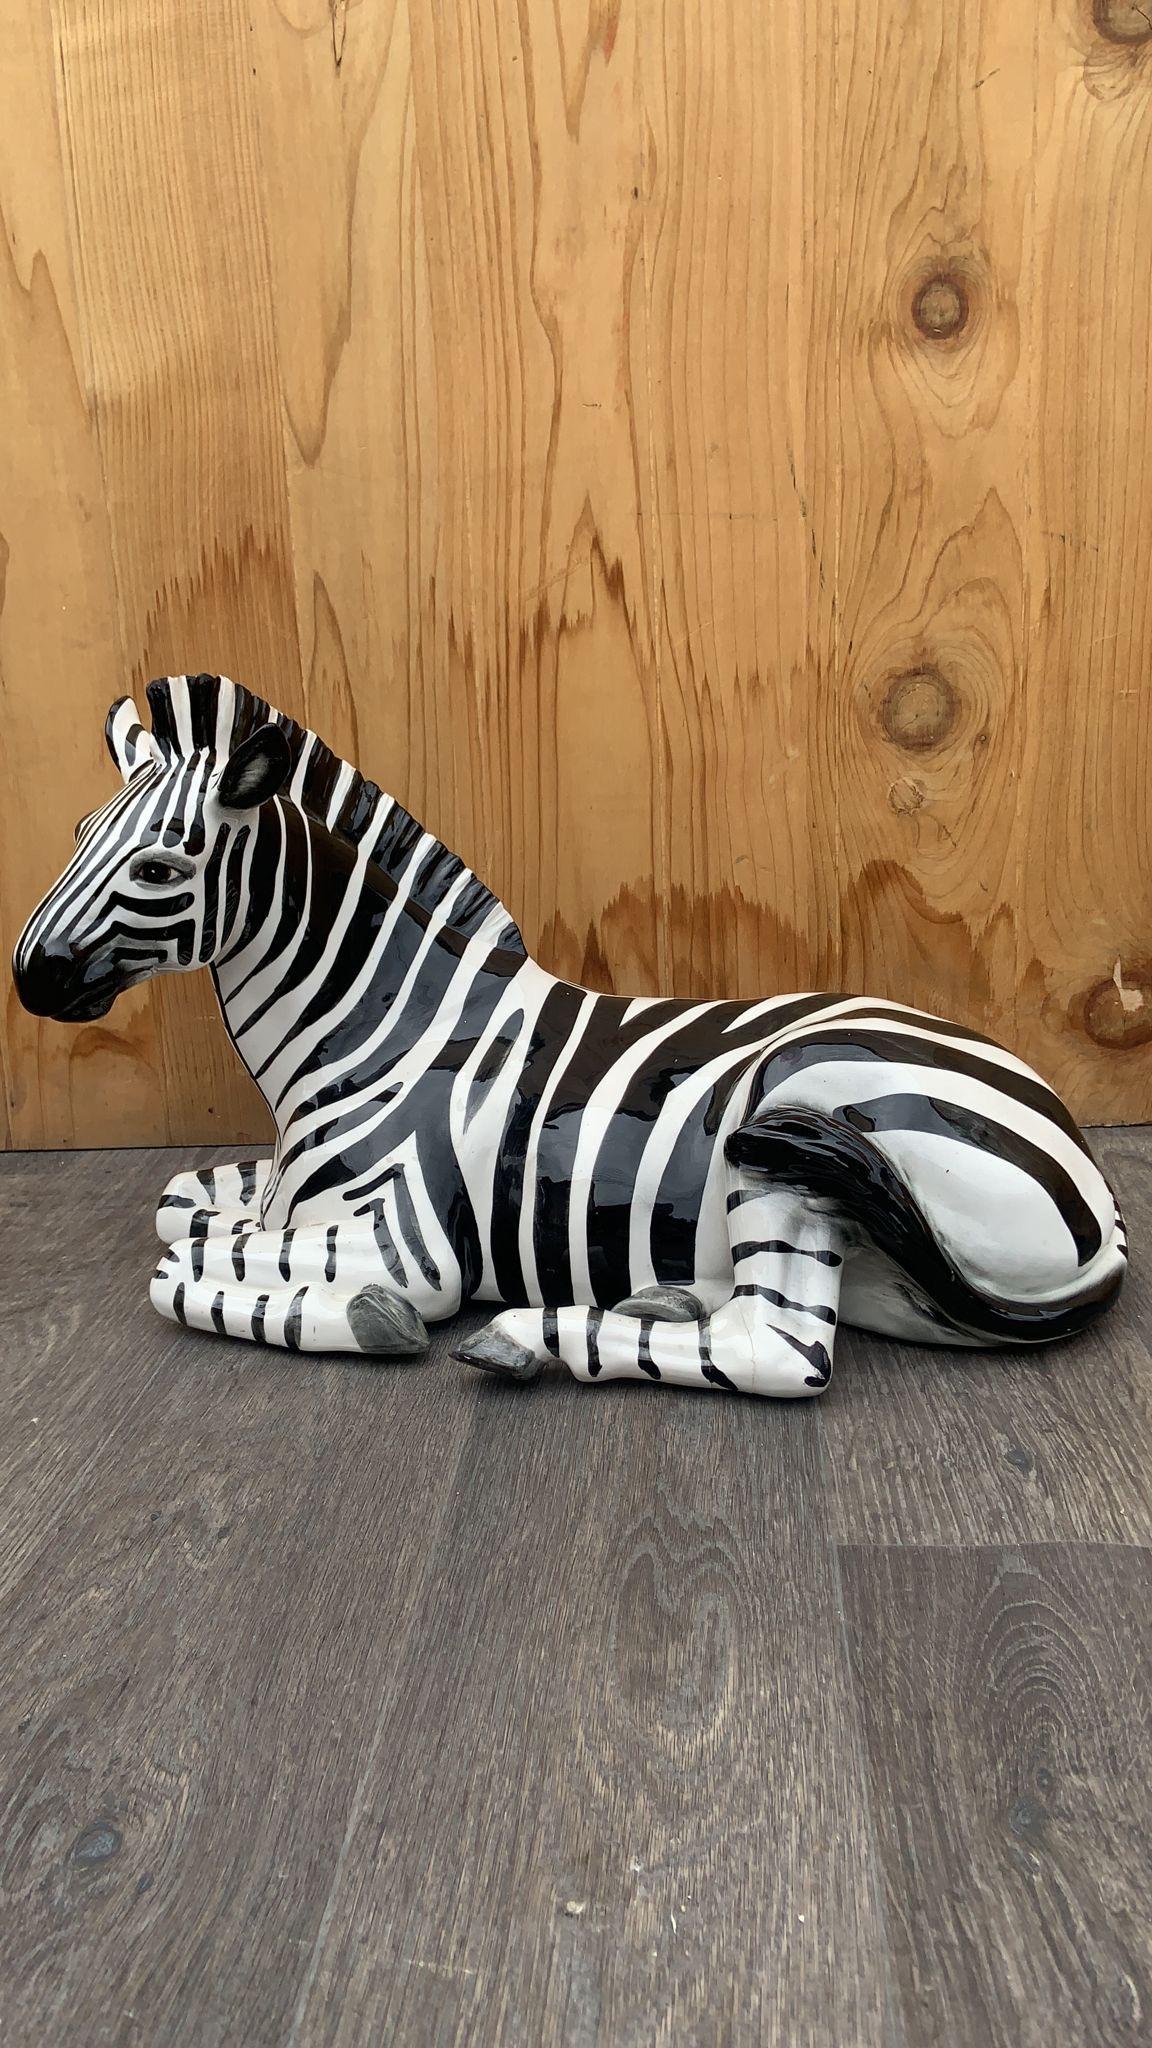 Hand-Crafted Mid Century Modern Ceramic Zebra Statue Sculpture Figurine  For Sale